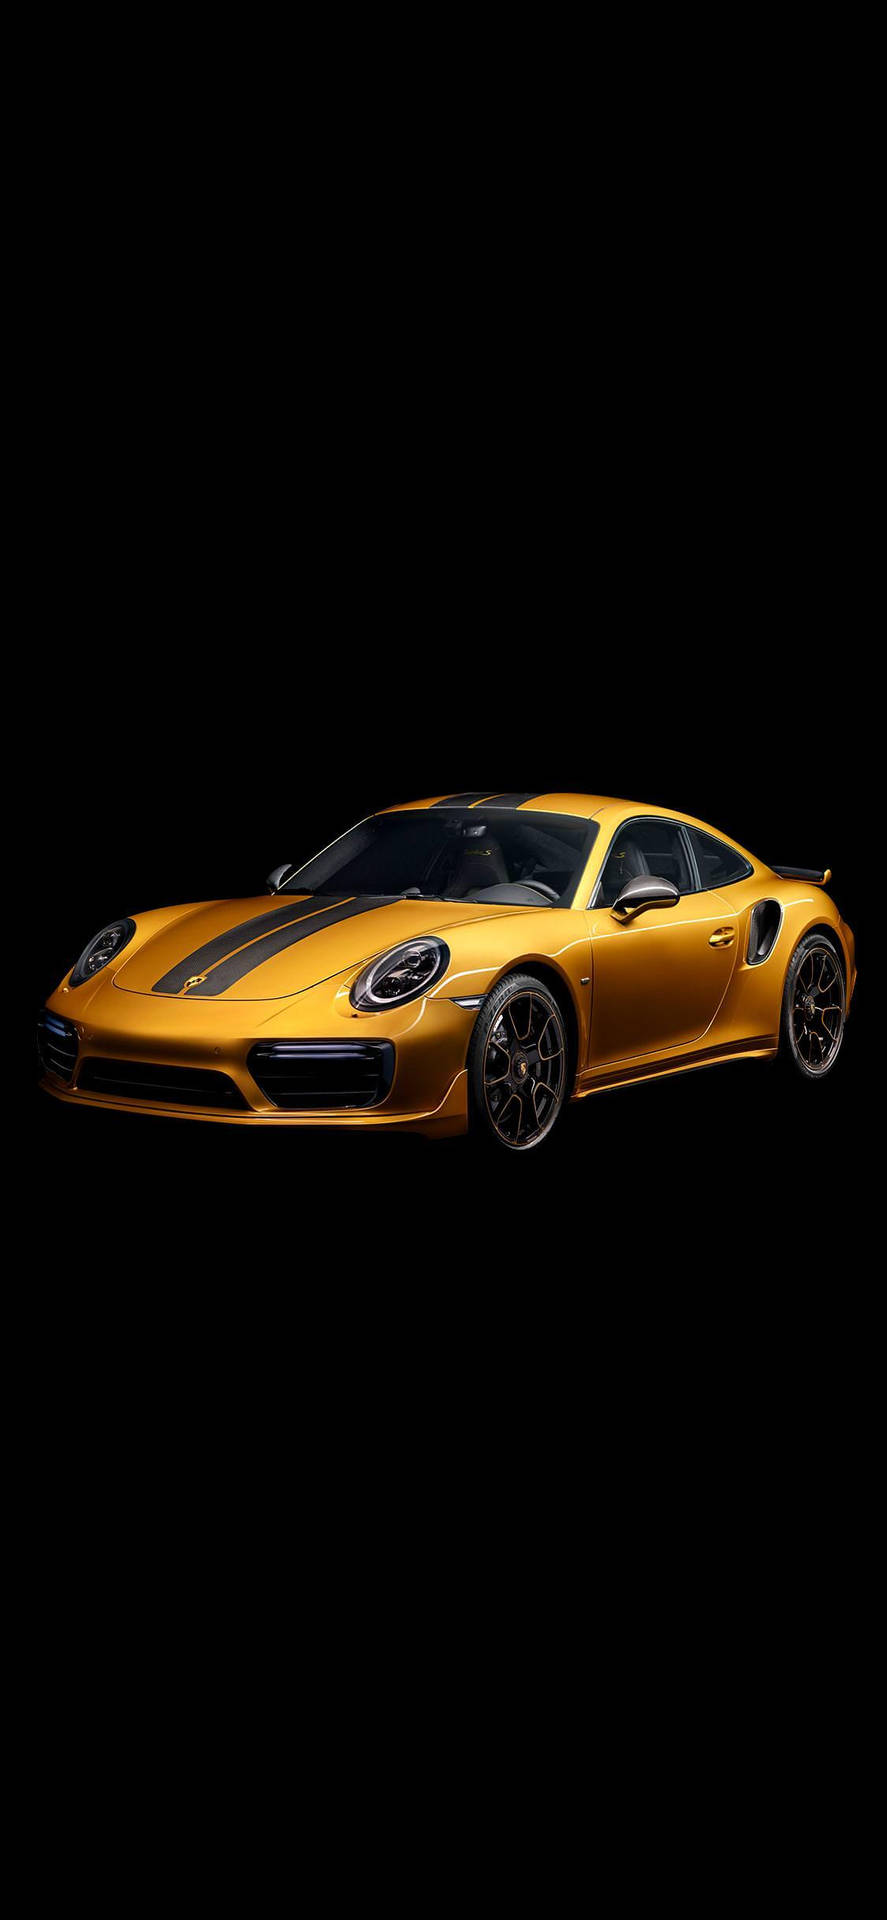 Iphone X Car Porsche Turbo S